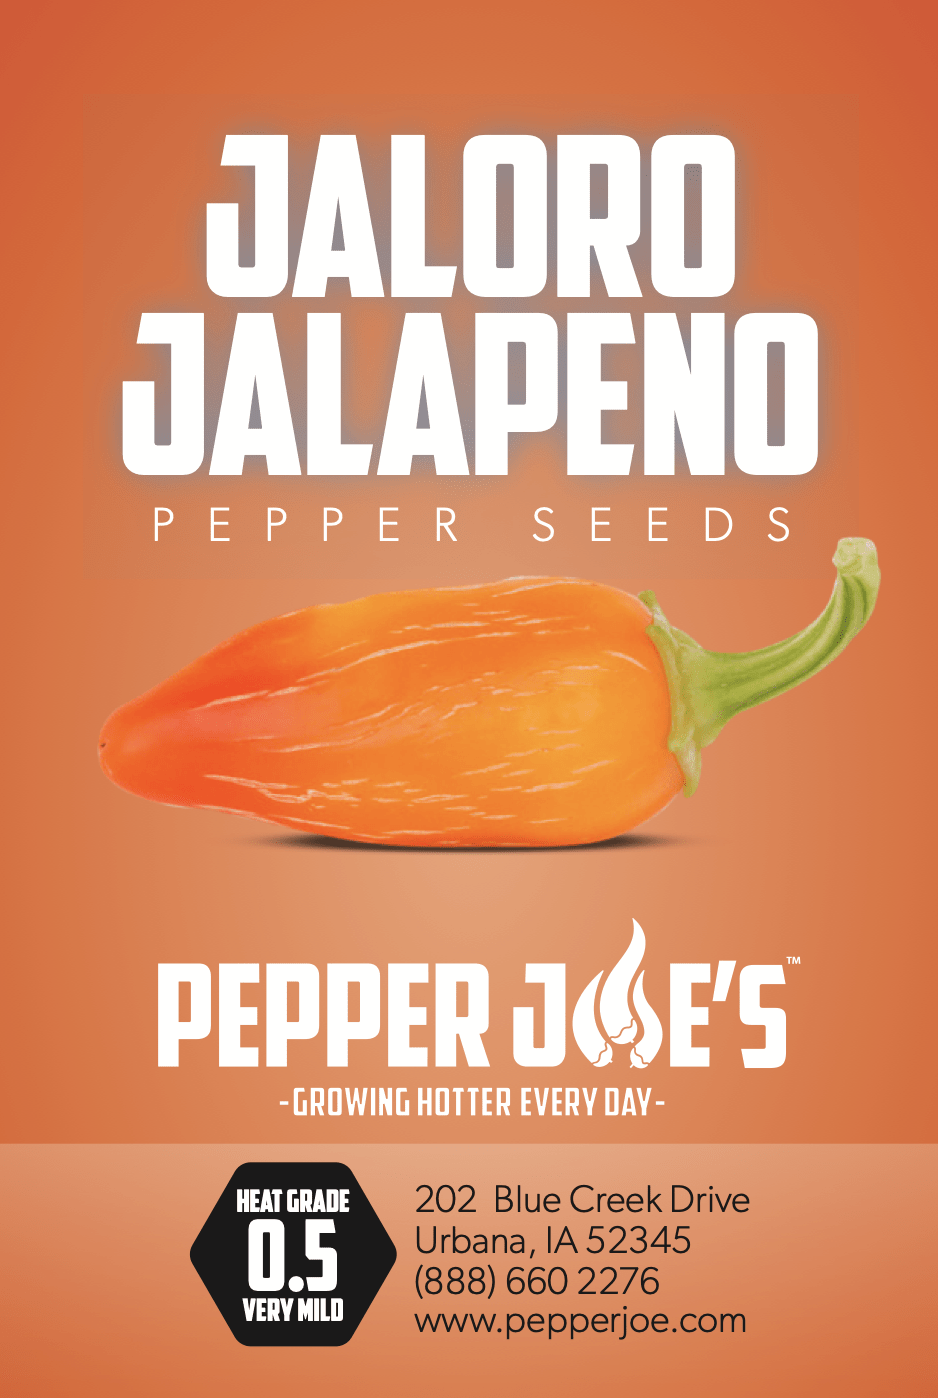 Jaloro Jalapeno seeds